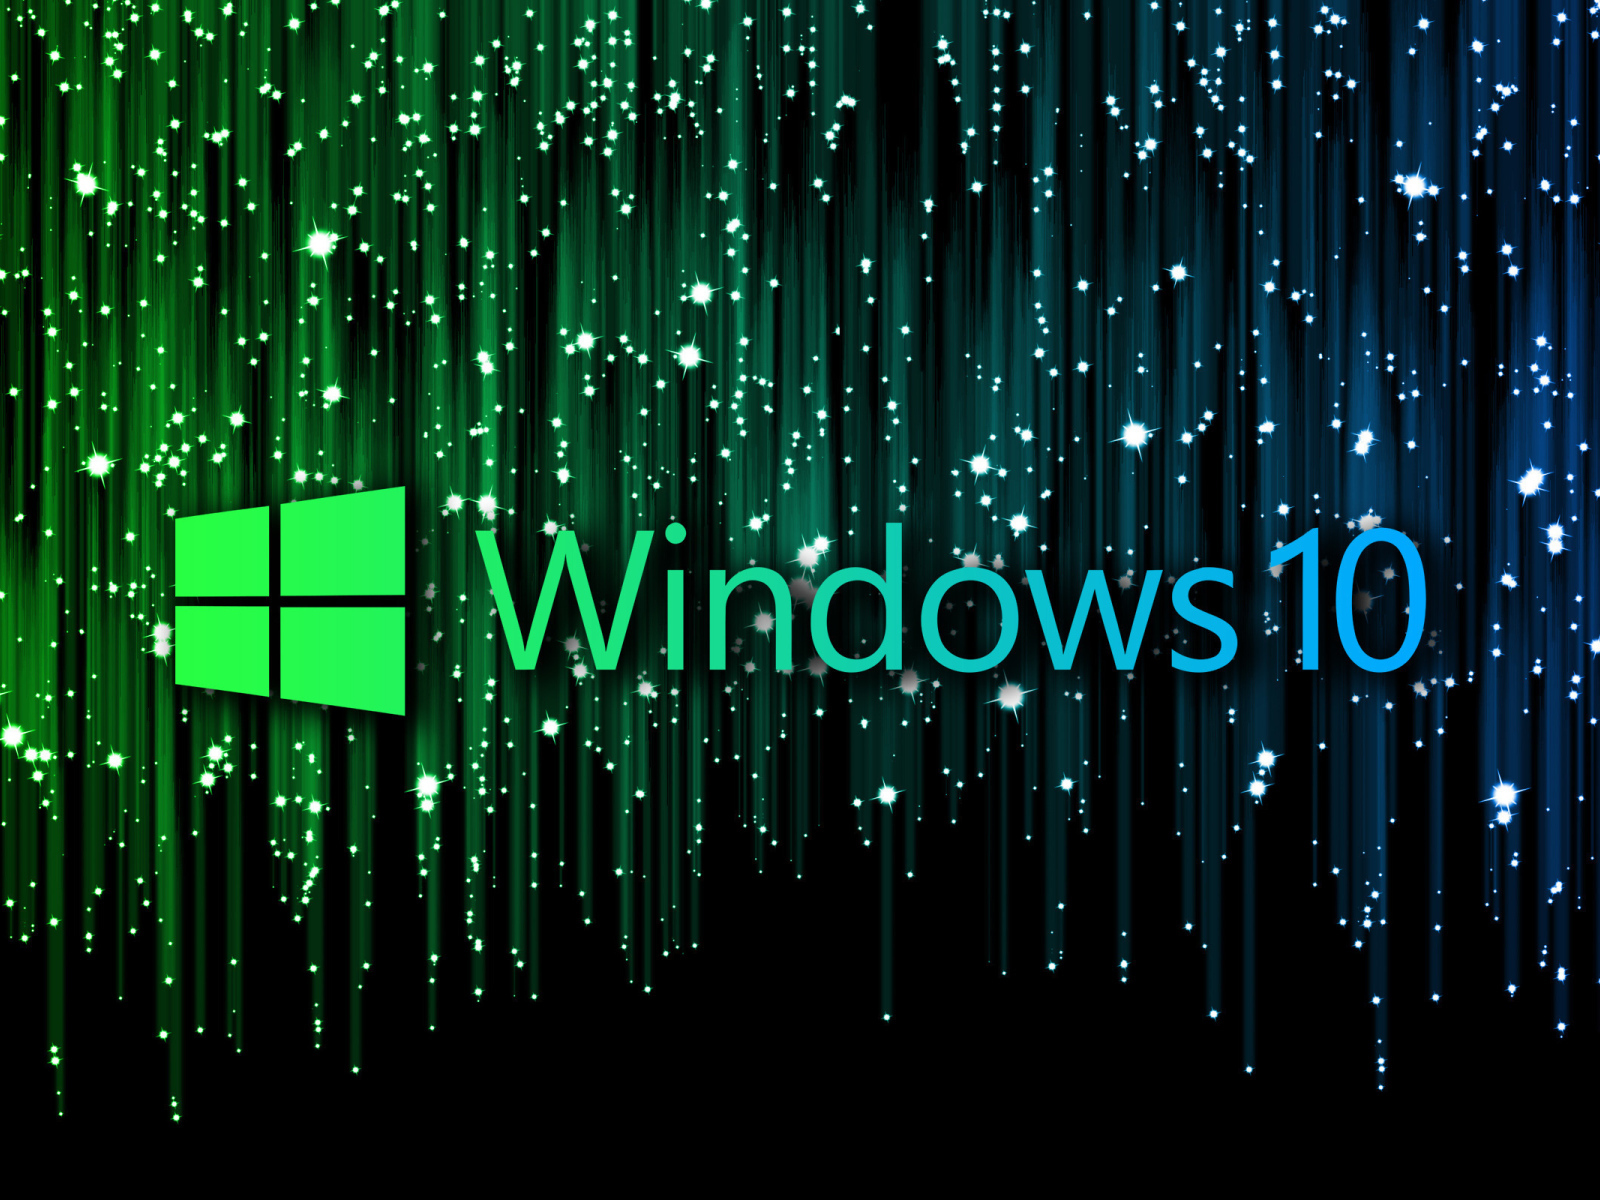 Beautiful screensaver with Windows 10